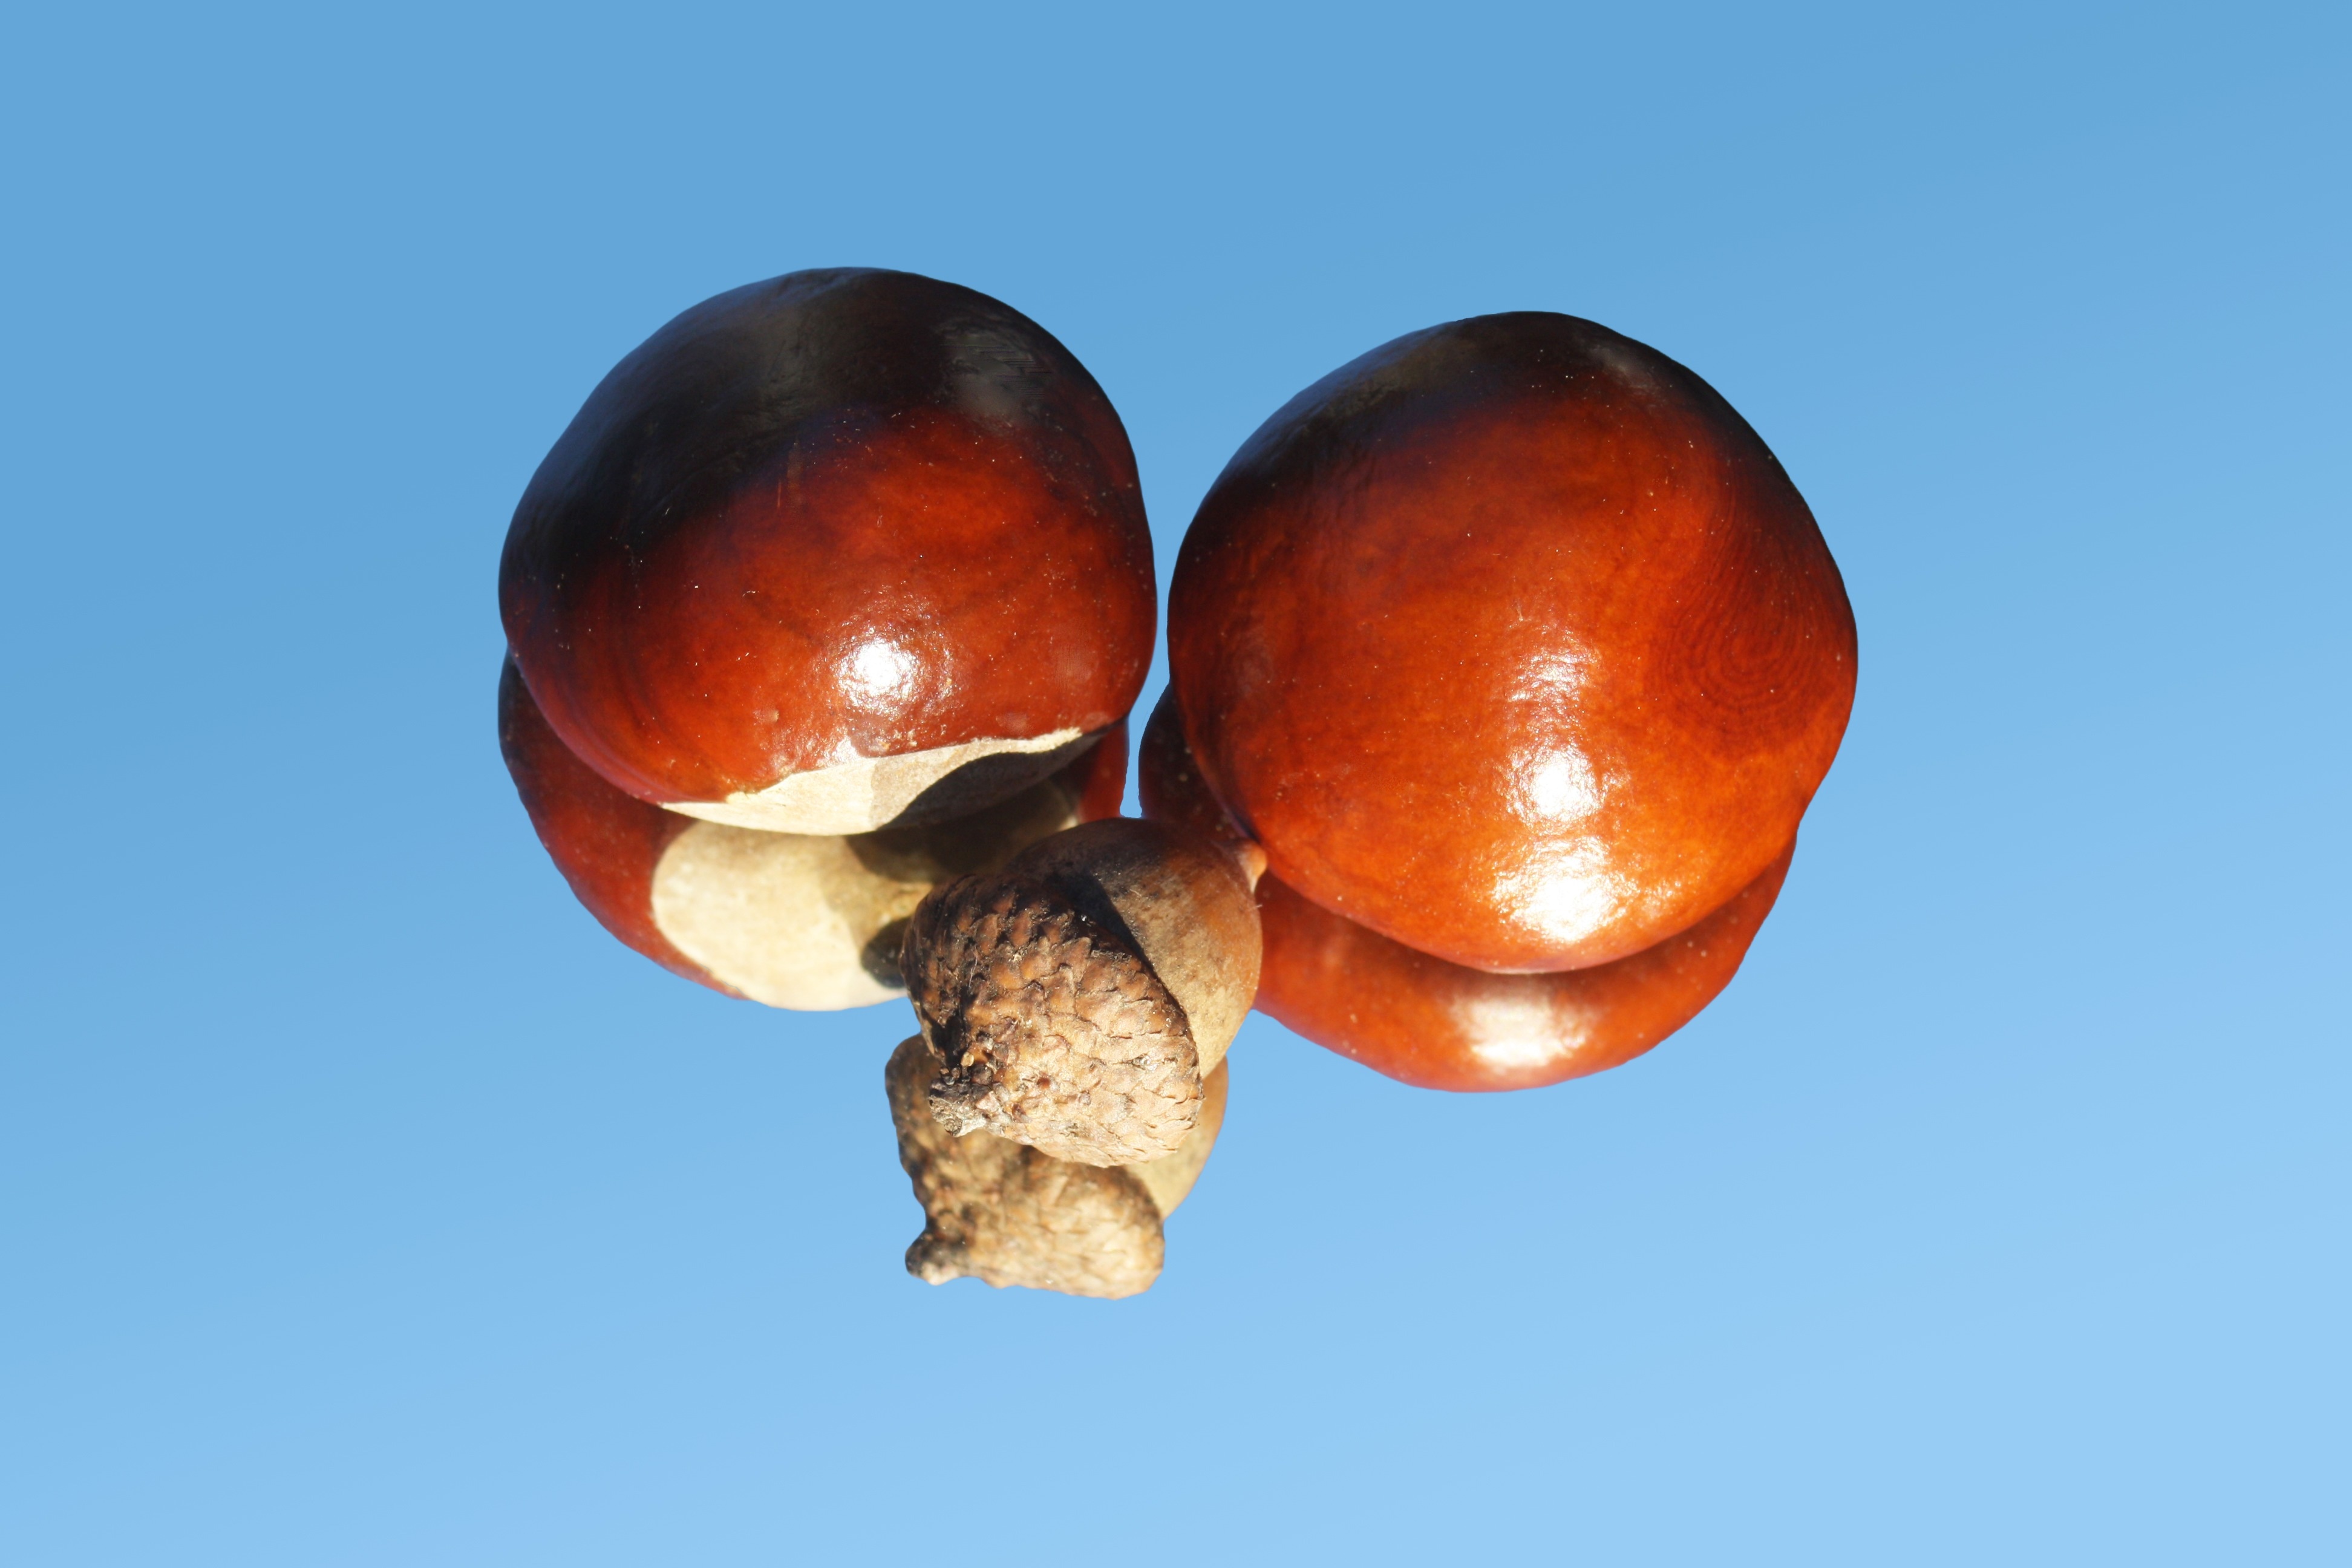 horse chestnut and walnut